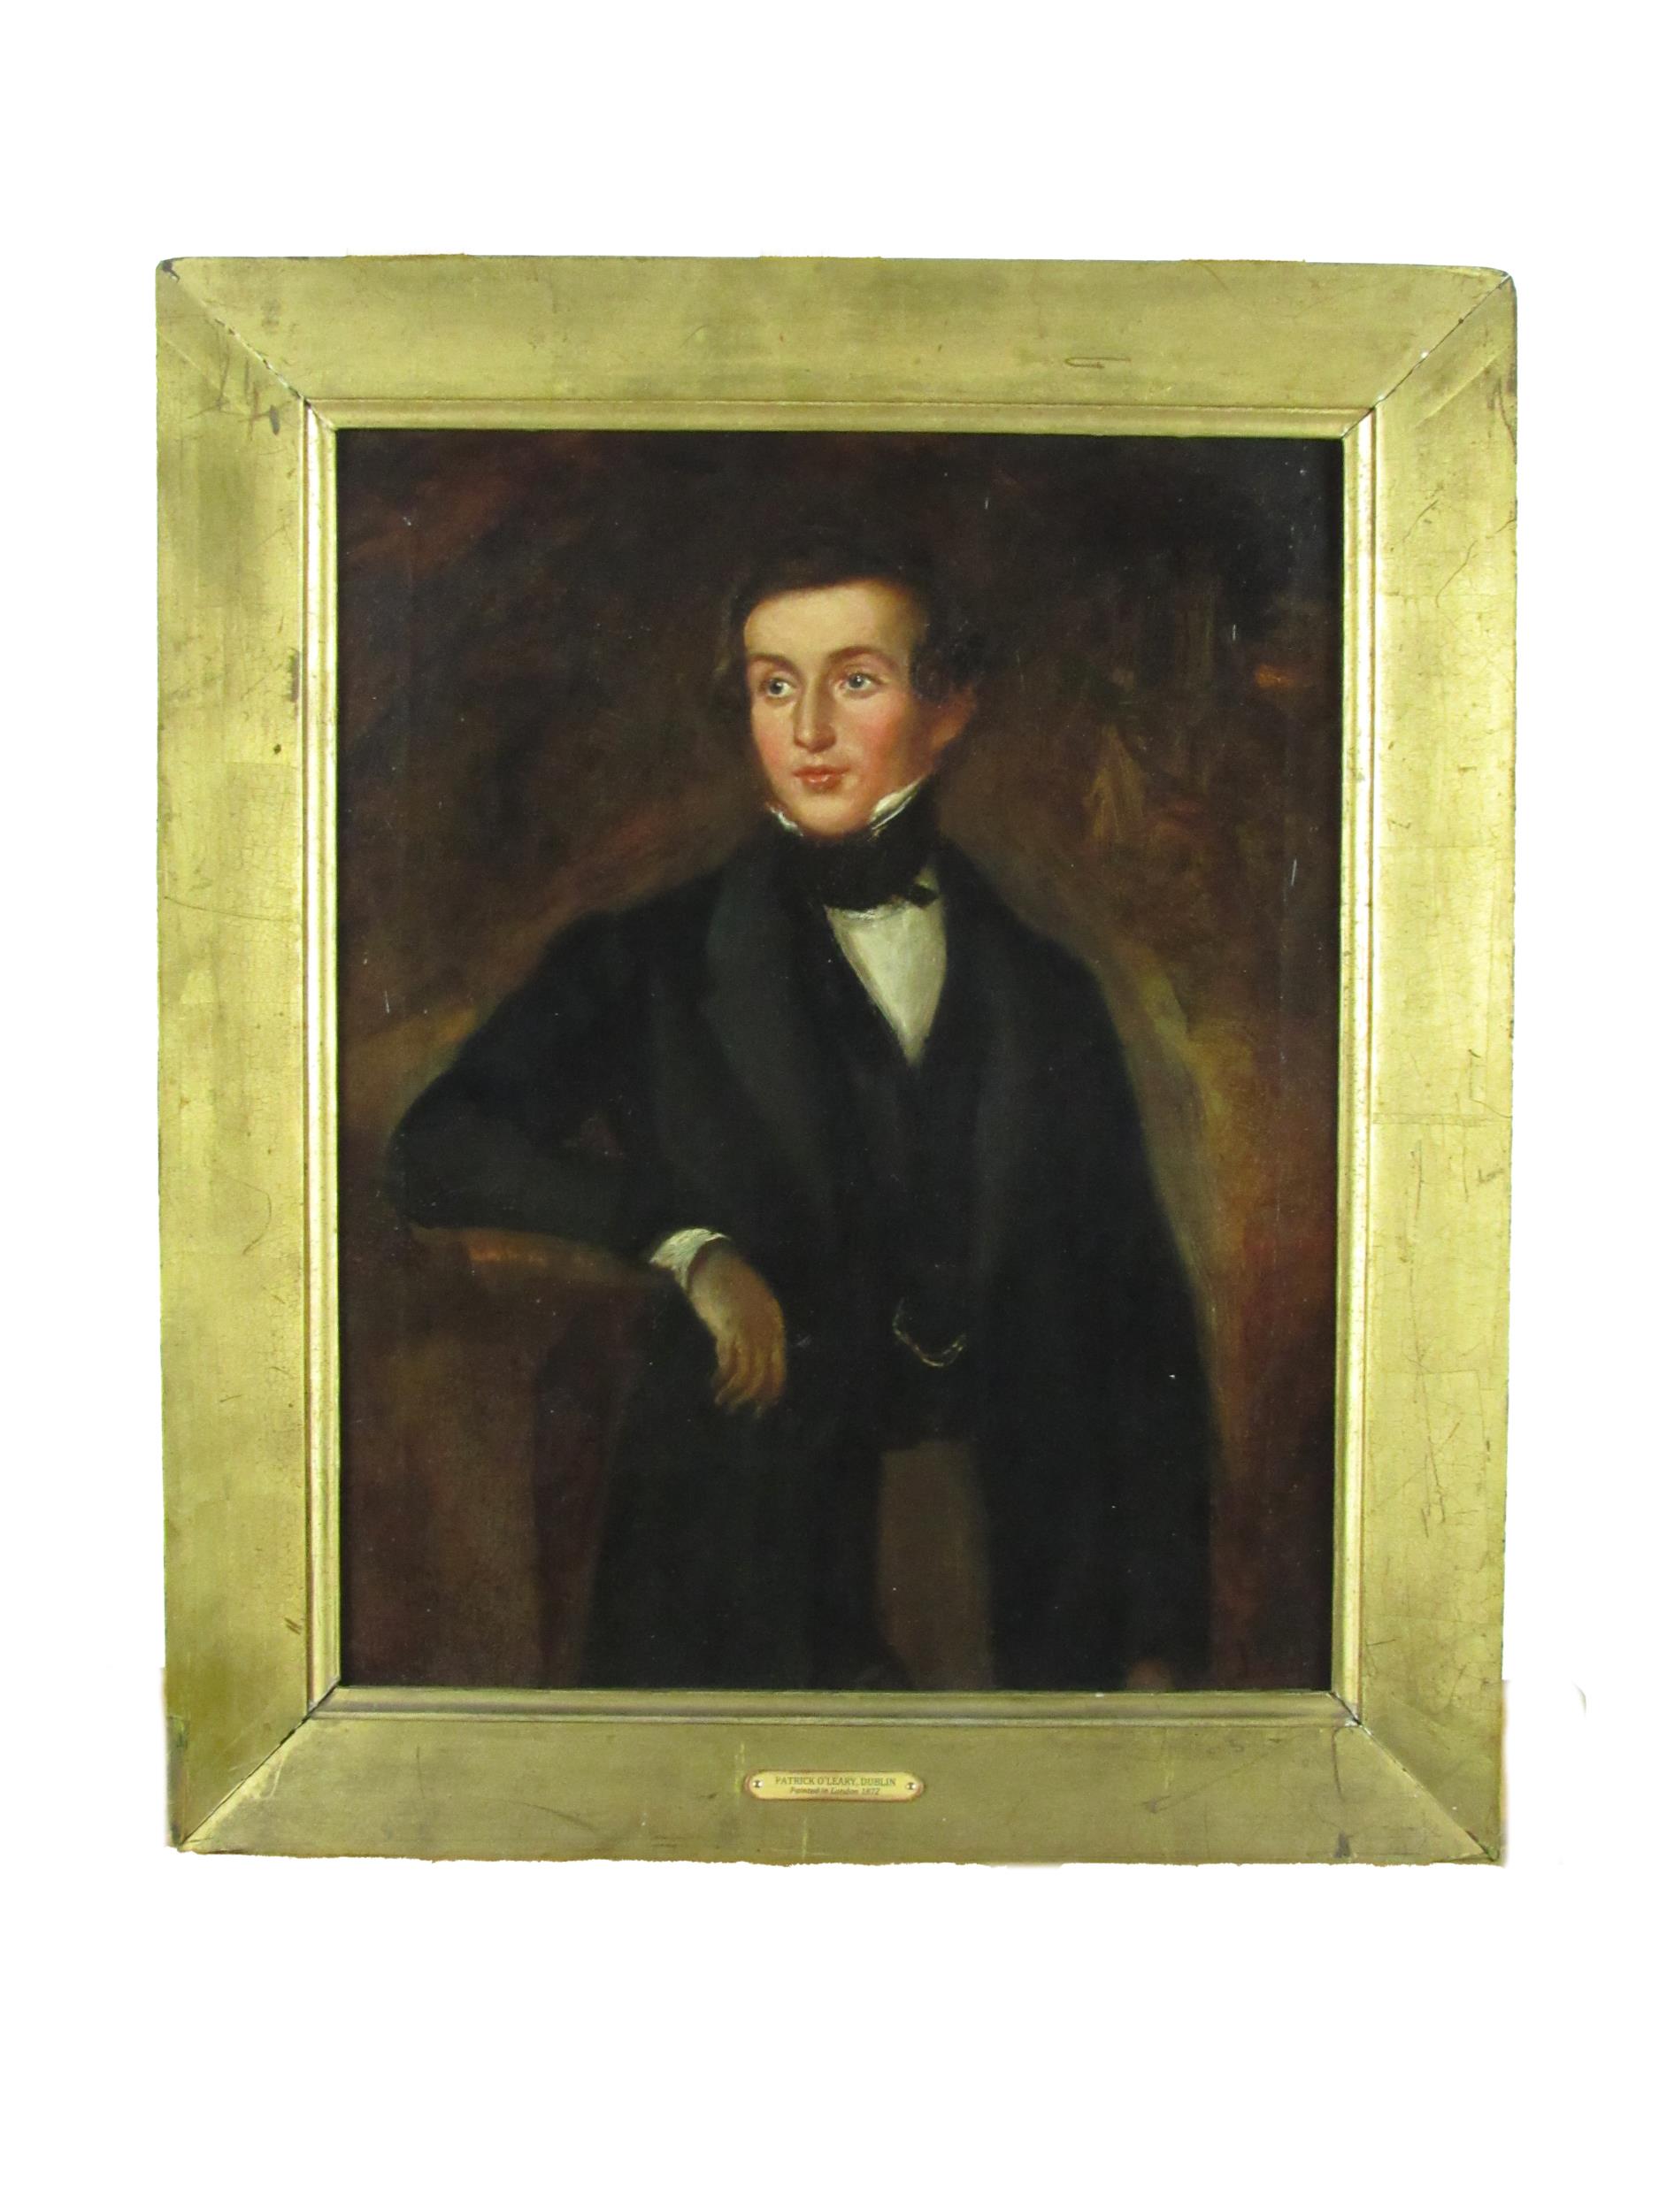 John Butler Yeats, RHA (1839-1922) "Patrick O'Leary," O.O.C., half length portrait of a young